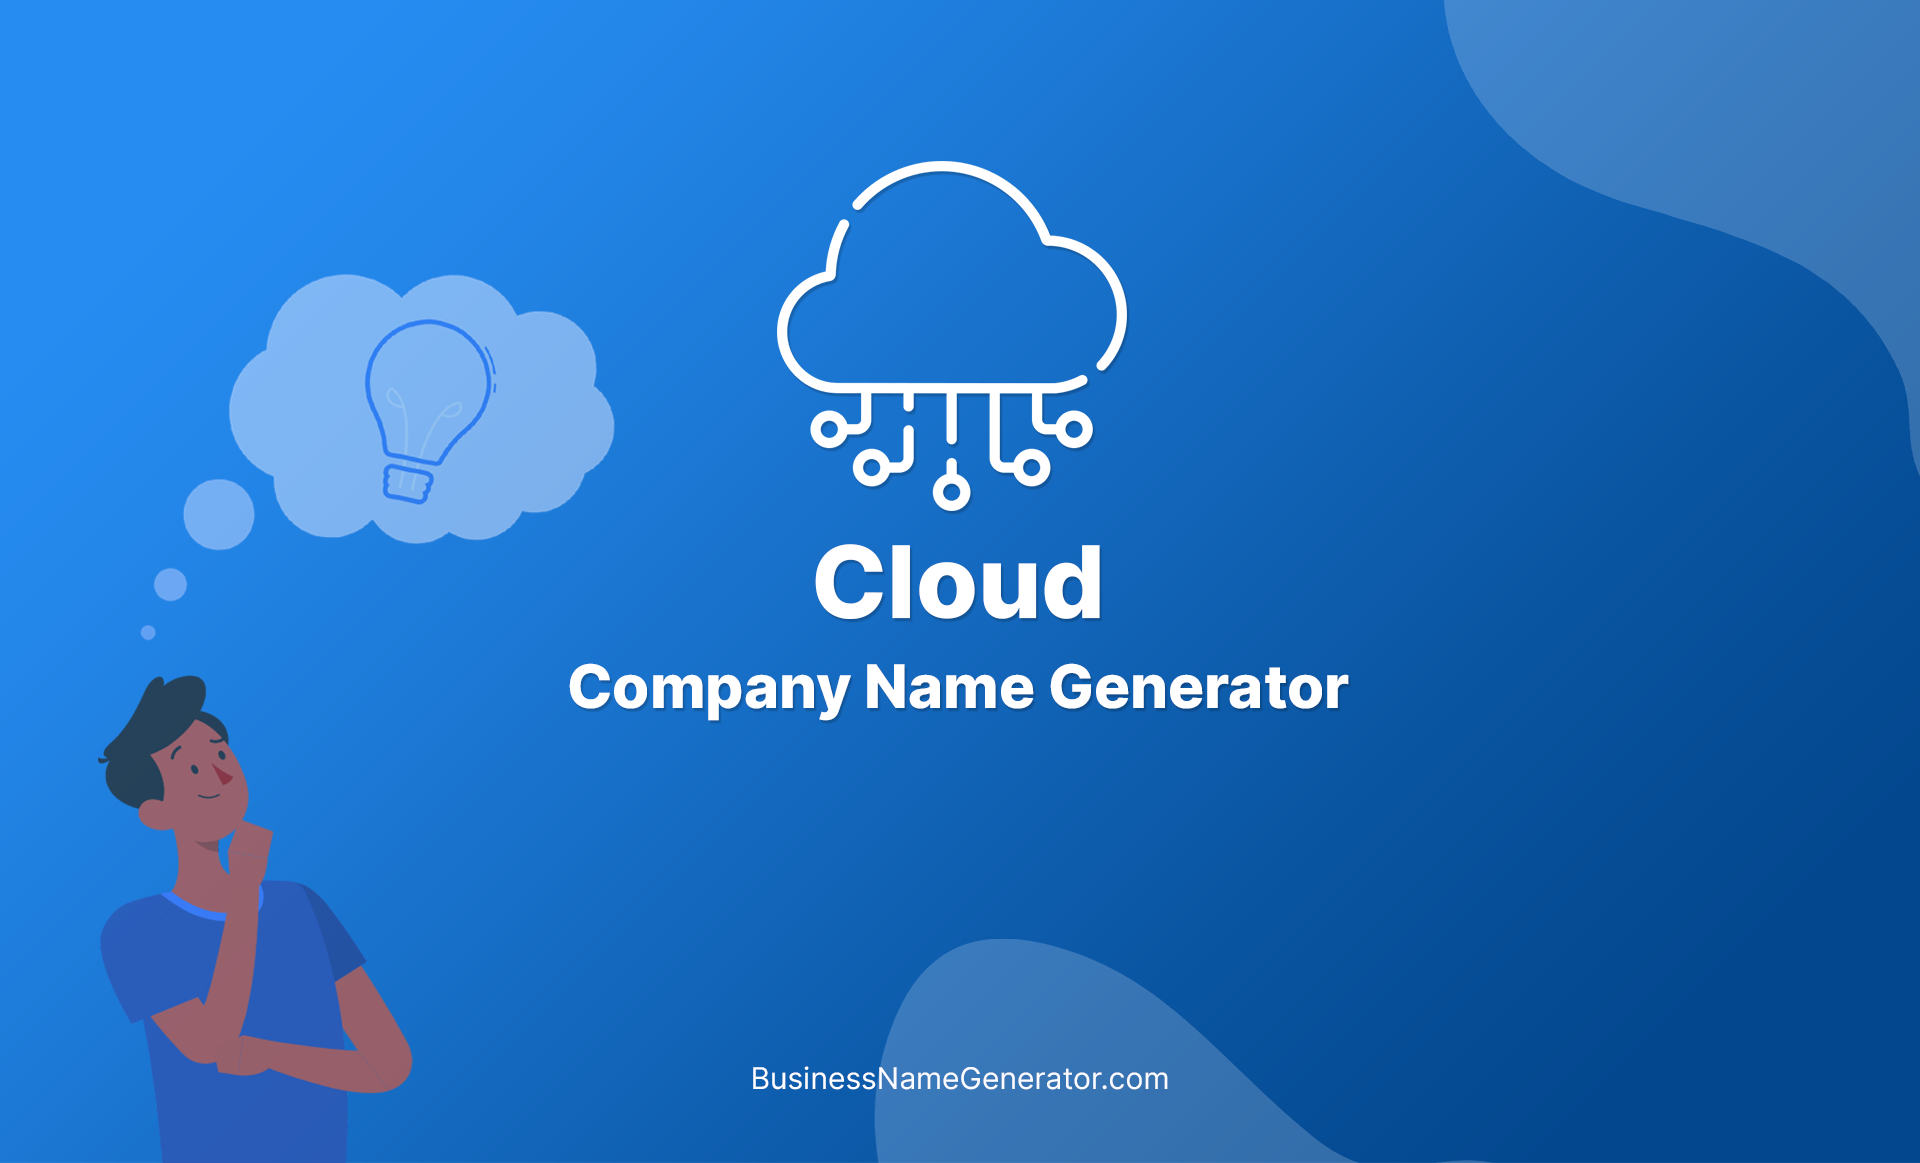 Cloud Company Name Generator